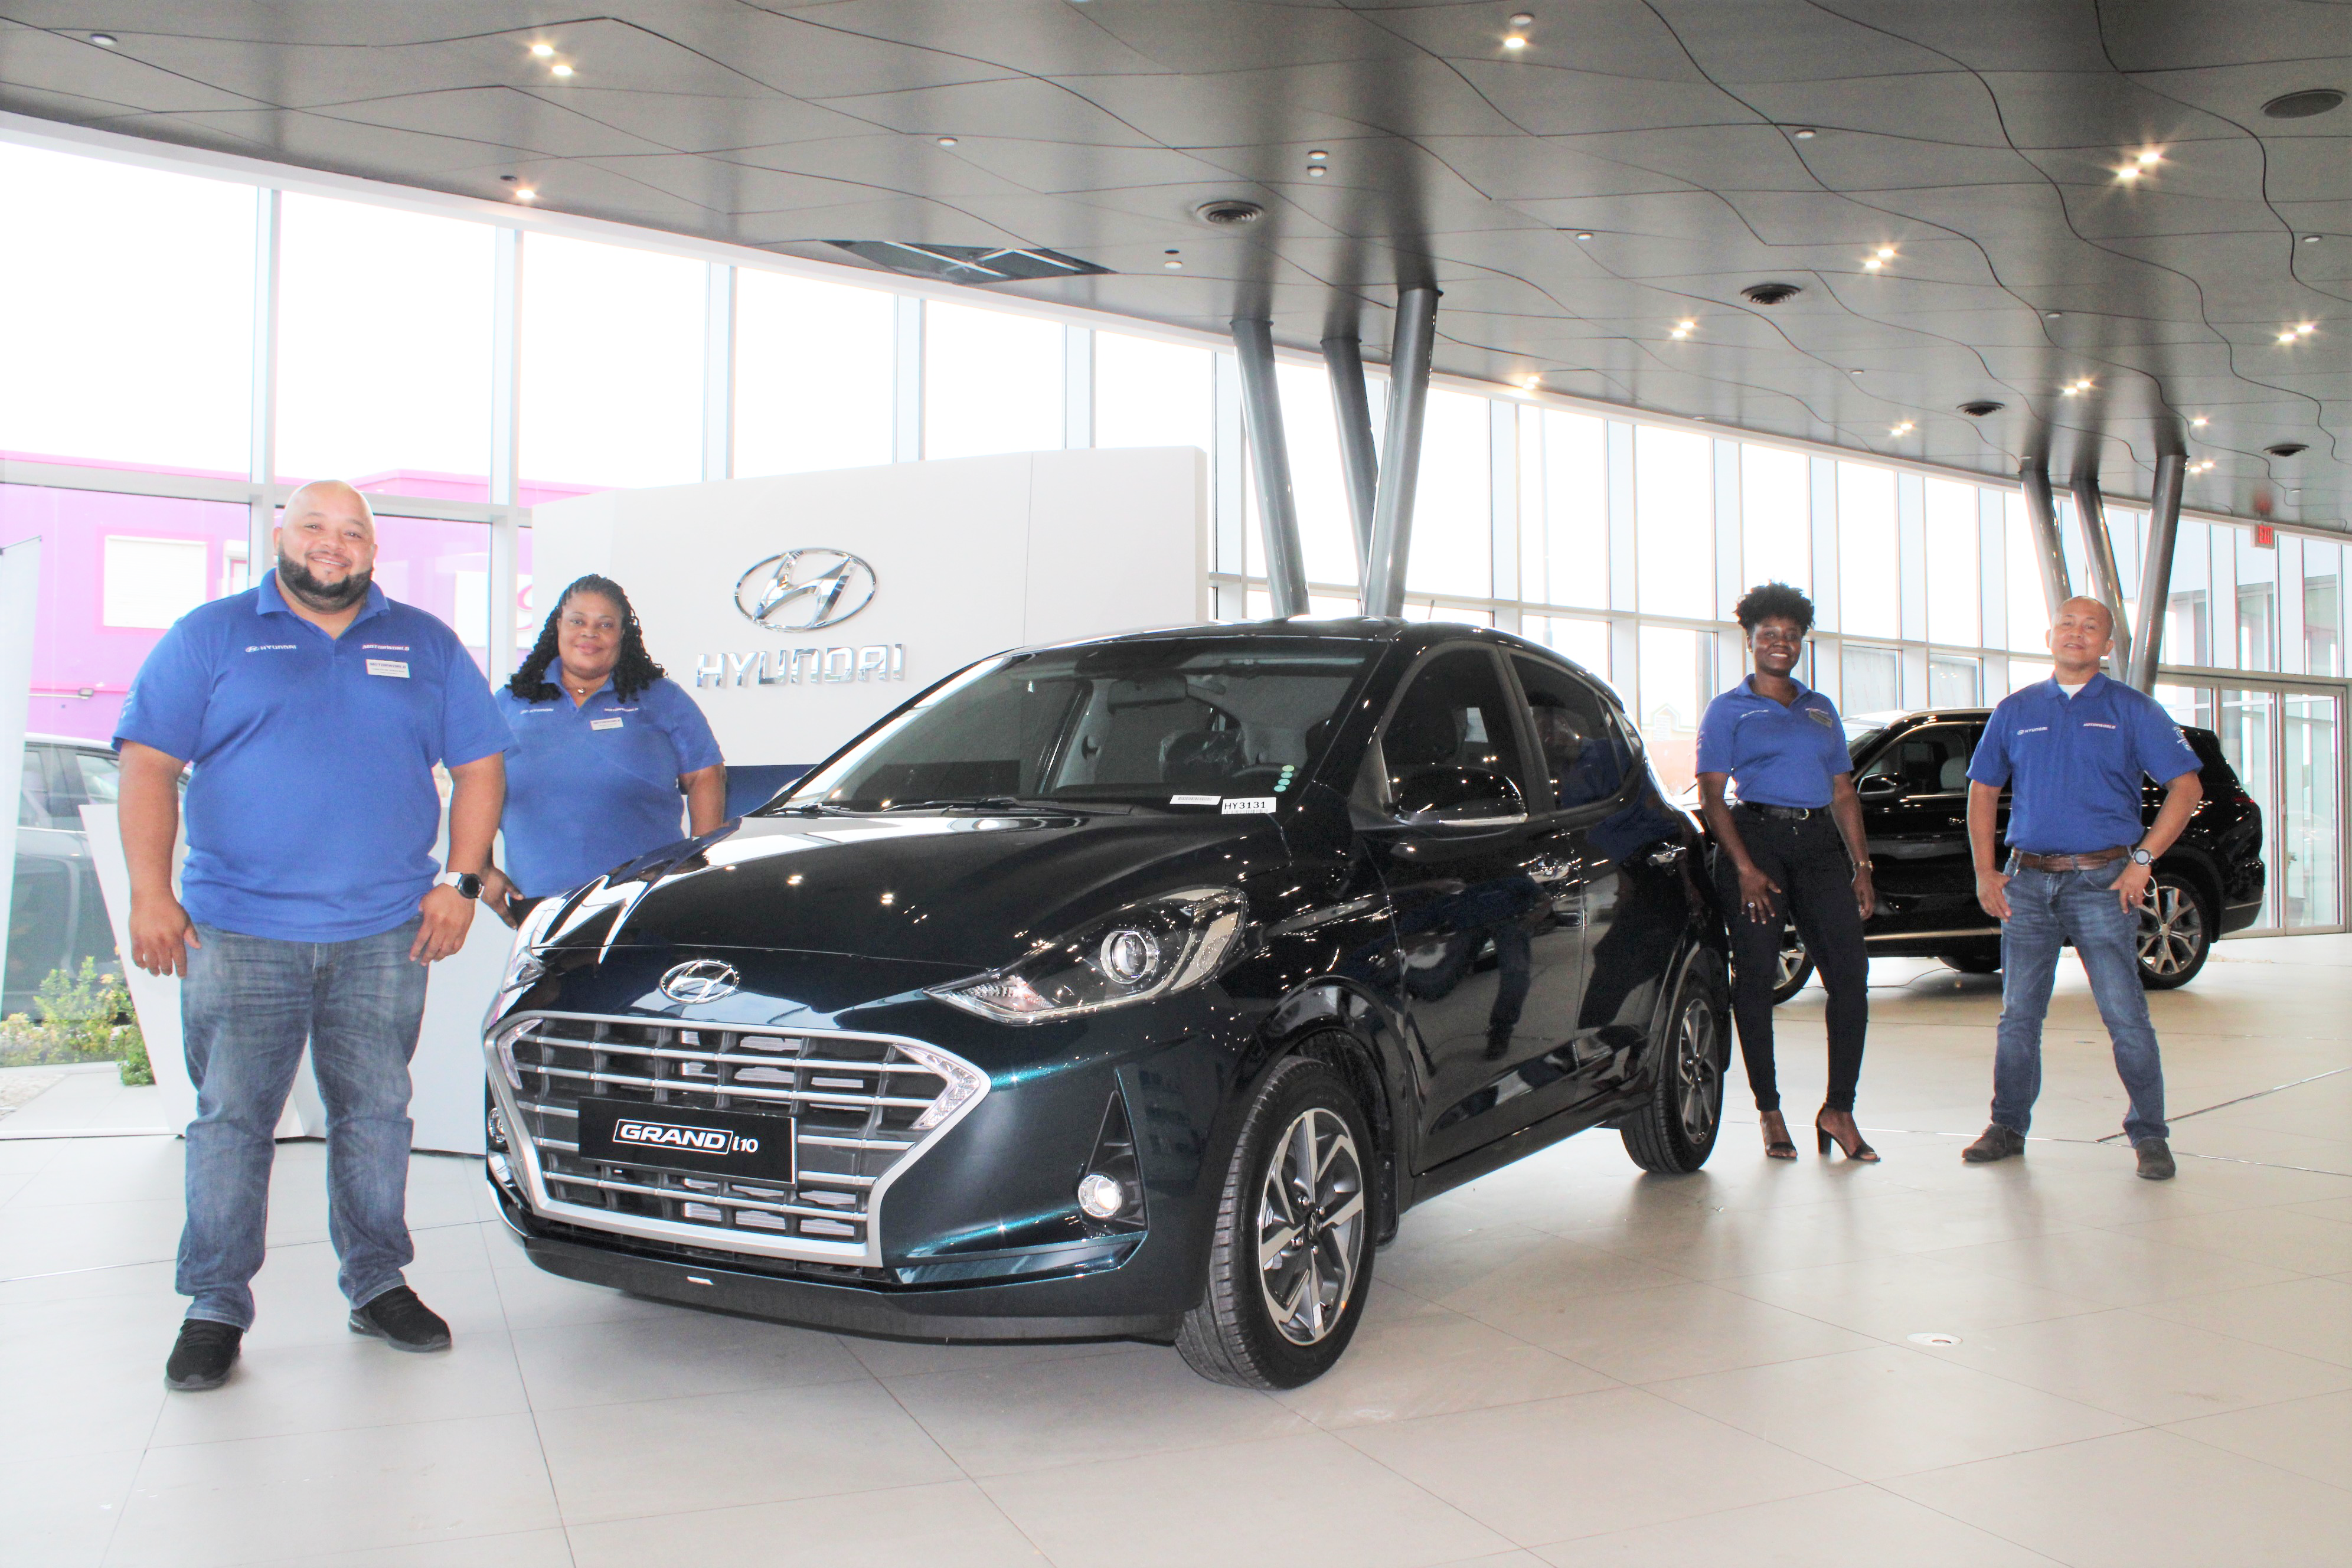 2014 Hyundai i10 showcased for Europe [Frankfurt Live]